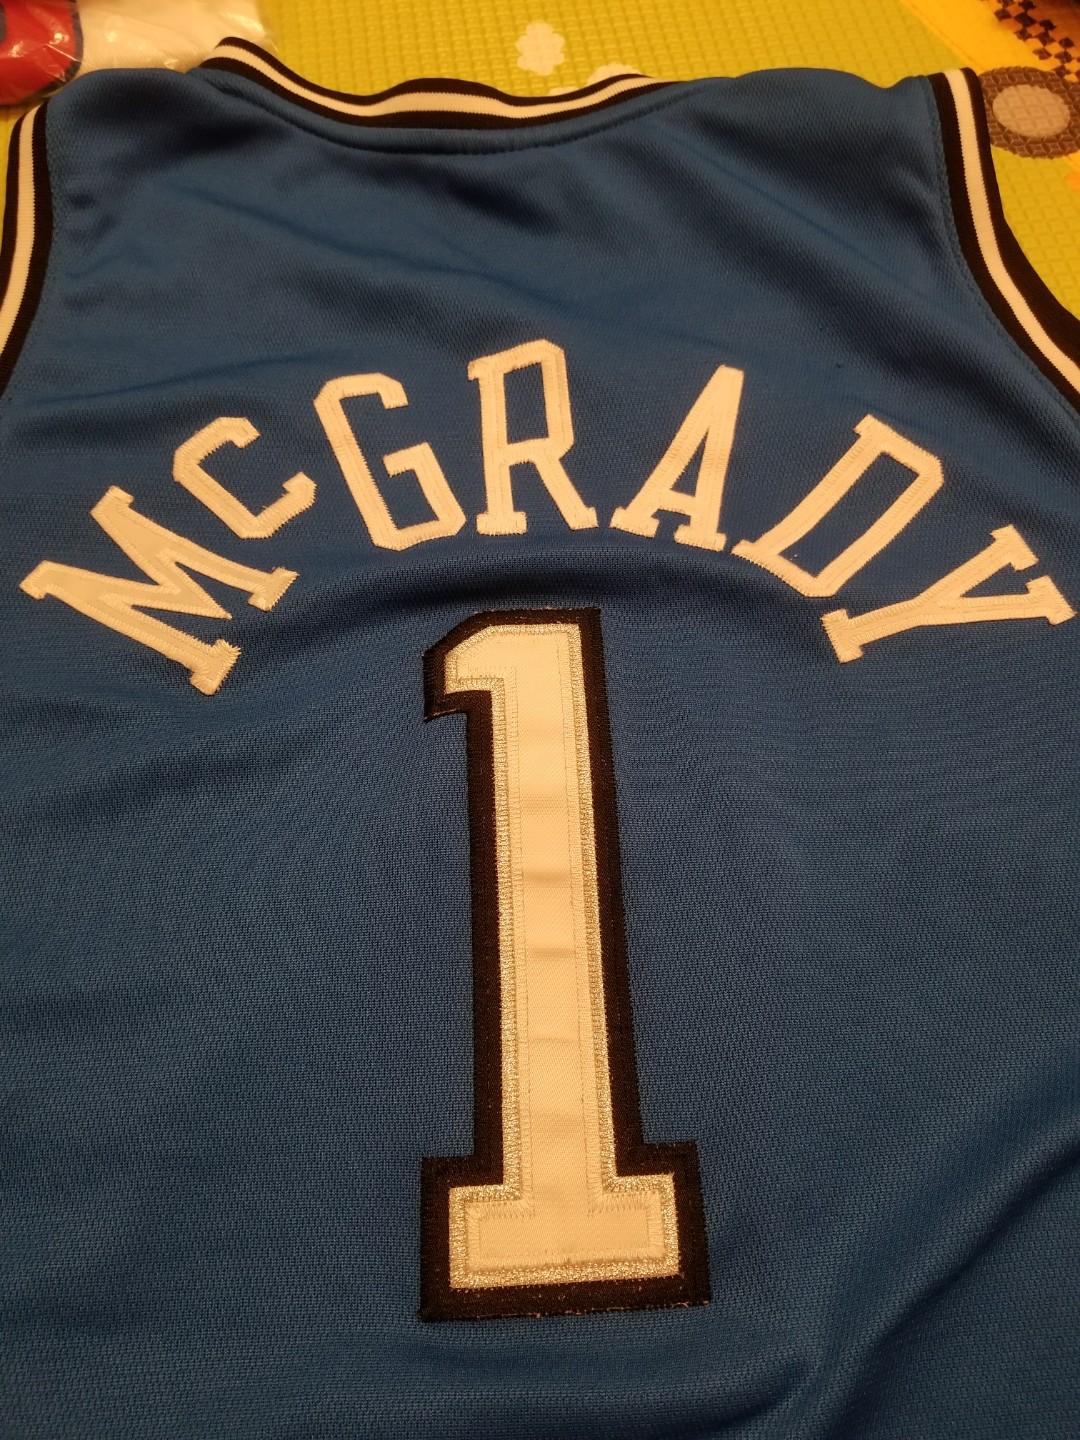 tracy mcgrady magic jersey authentic